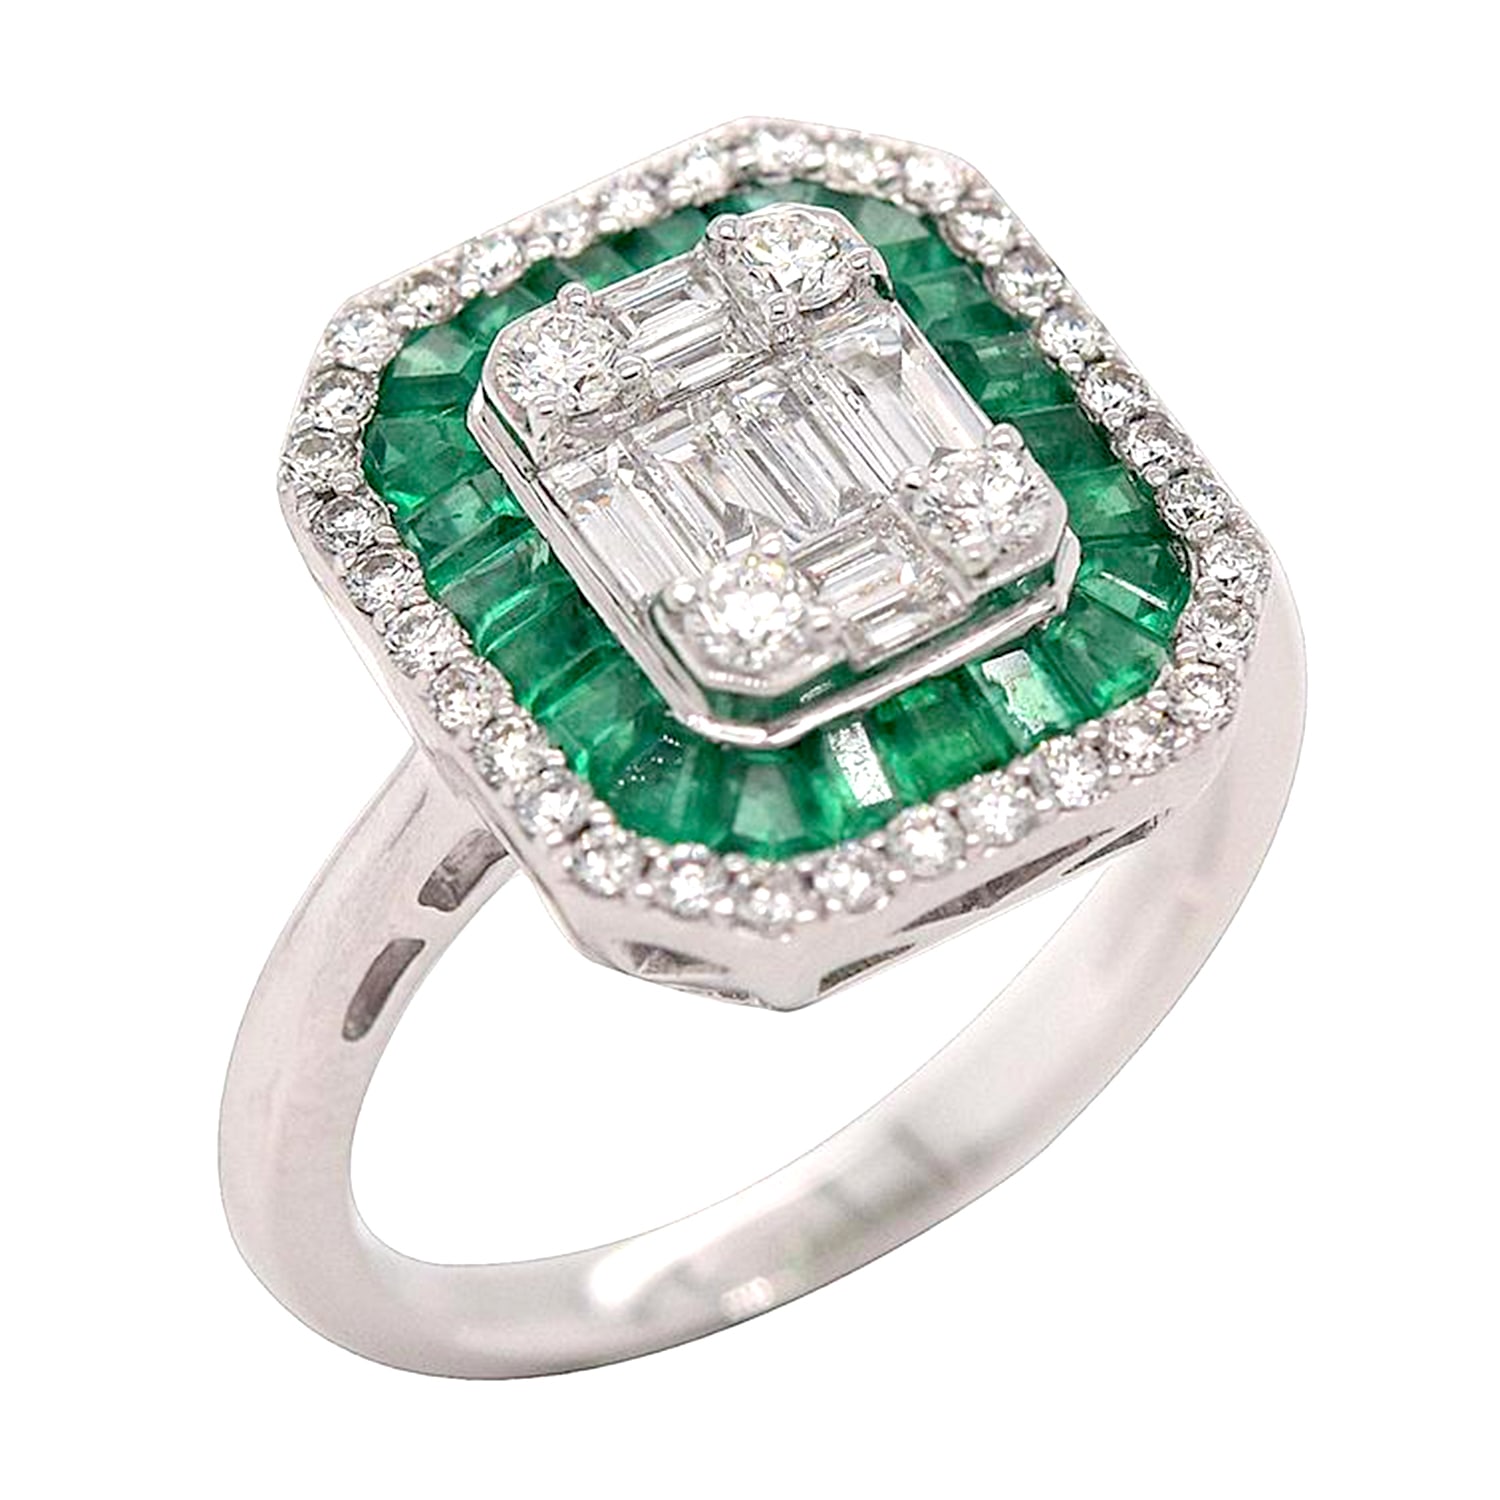 Women’s Green / White Genuine Baguette Cut Diamond & Green Emerald Gemstone 18K White Gold Cocktail Ring Artisan